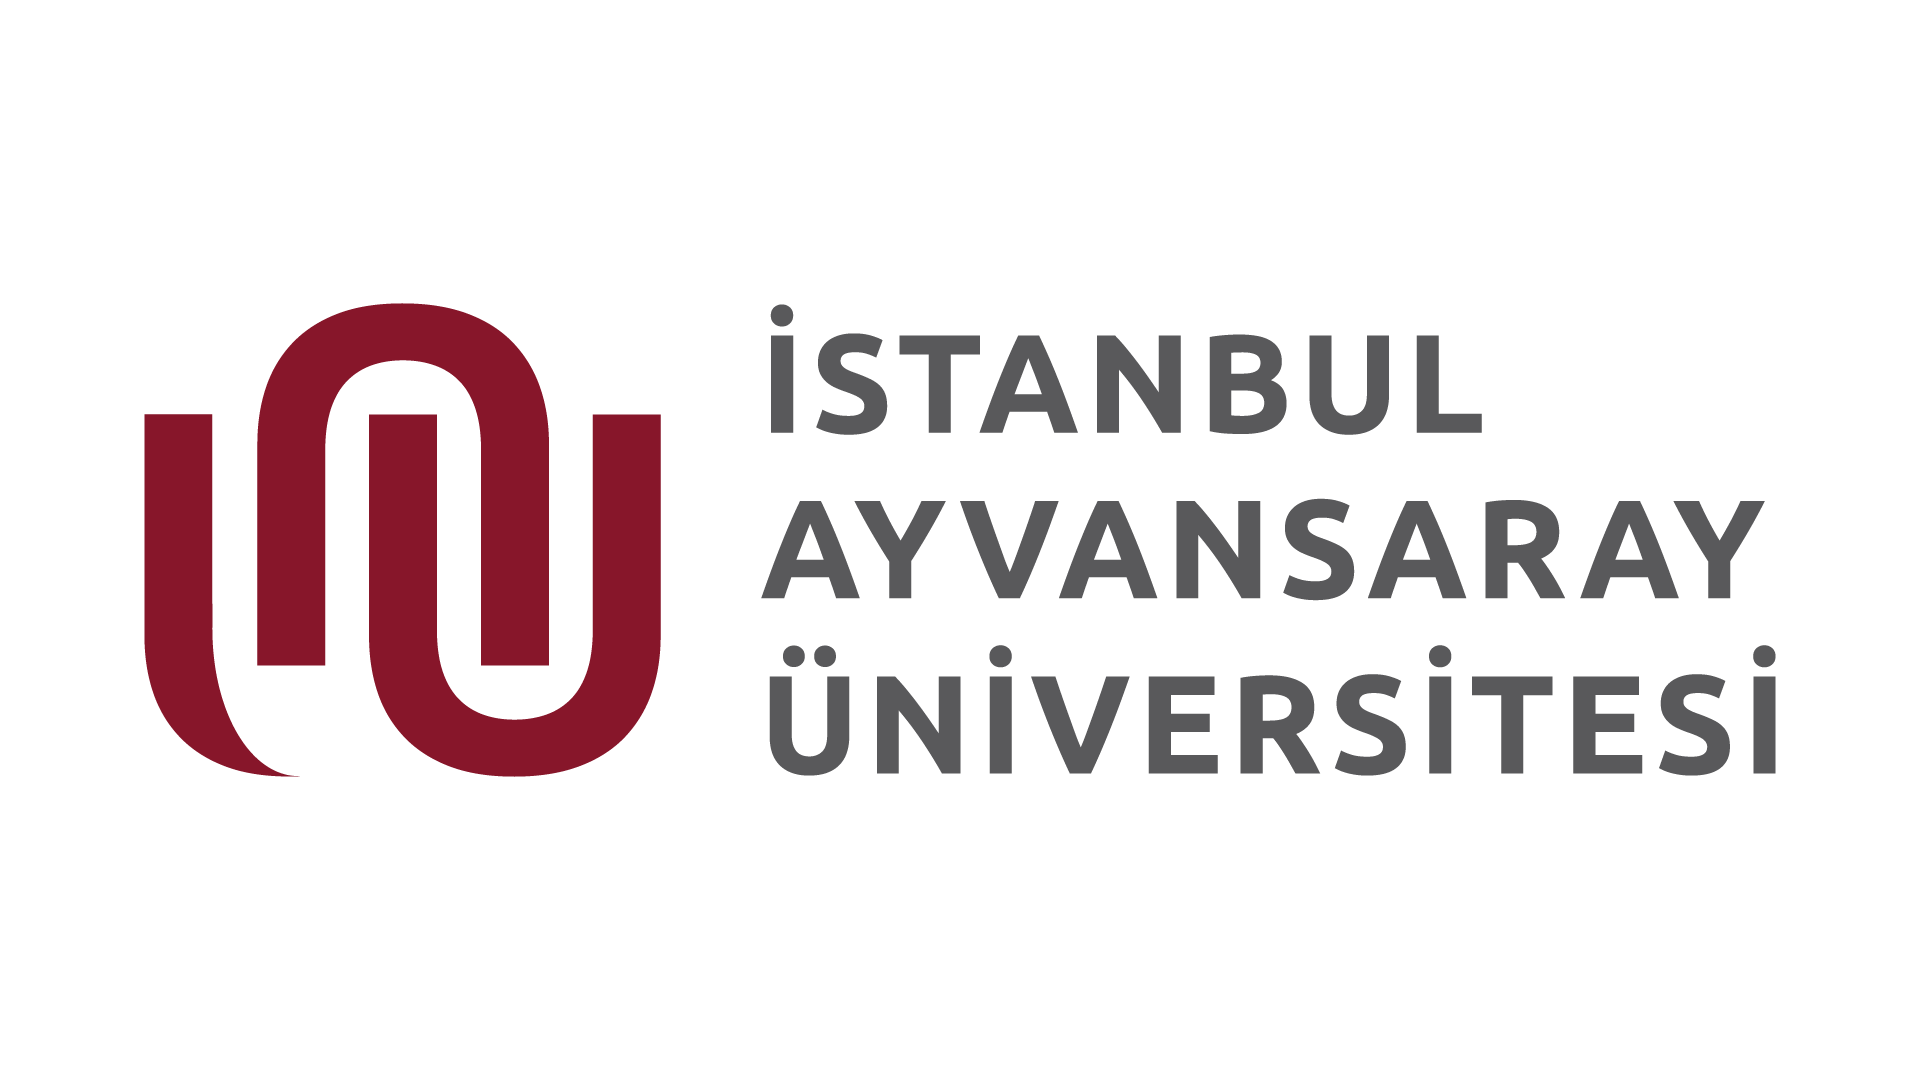 Ayvansaray University